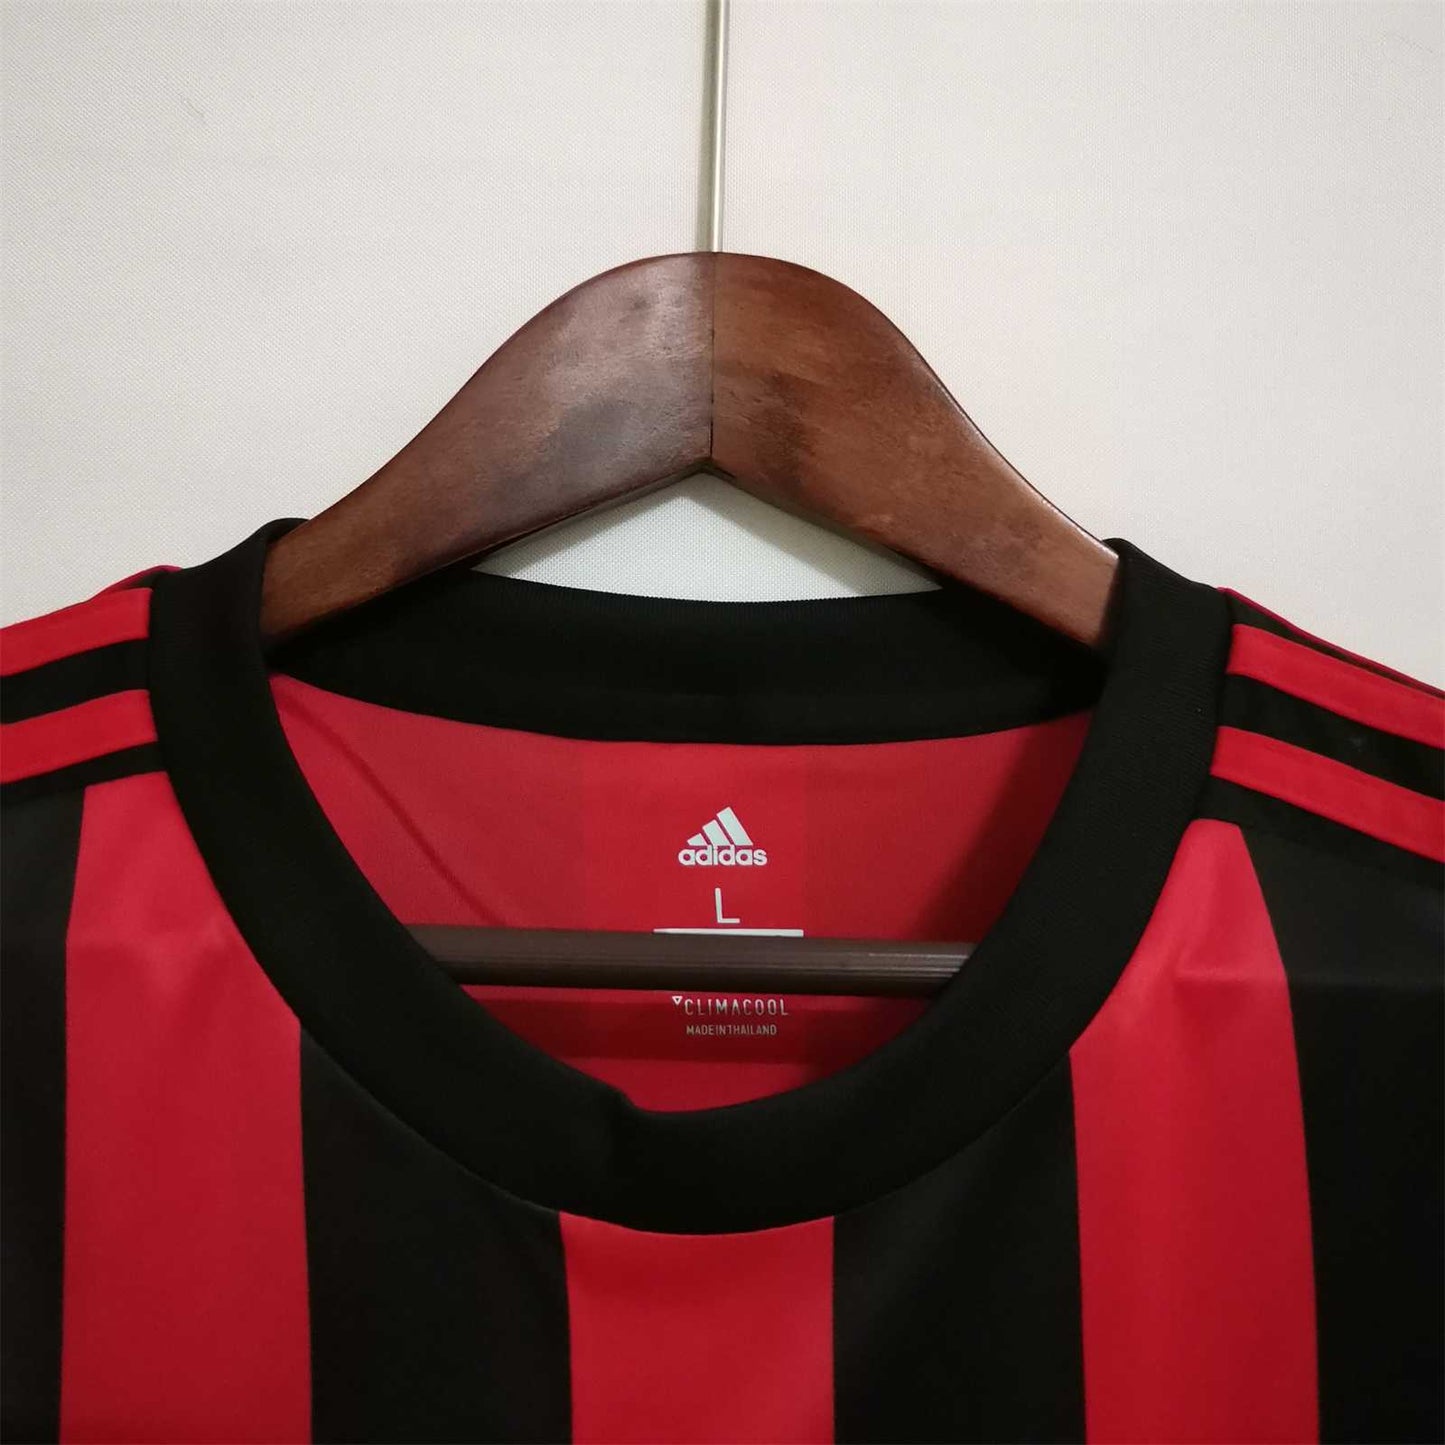 AC Milan 17-18 Home Shirt